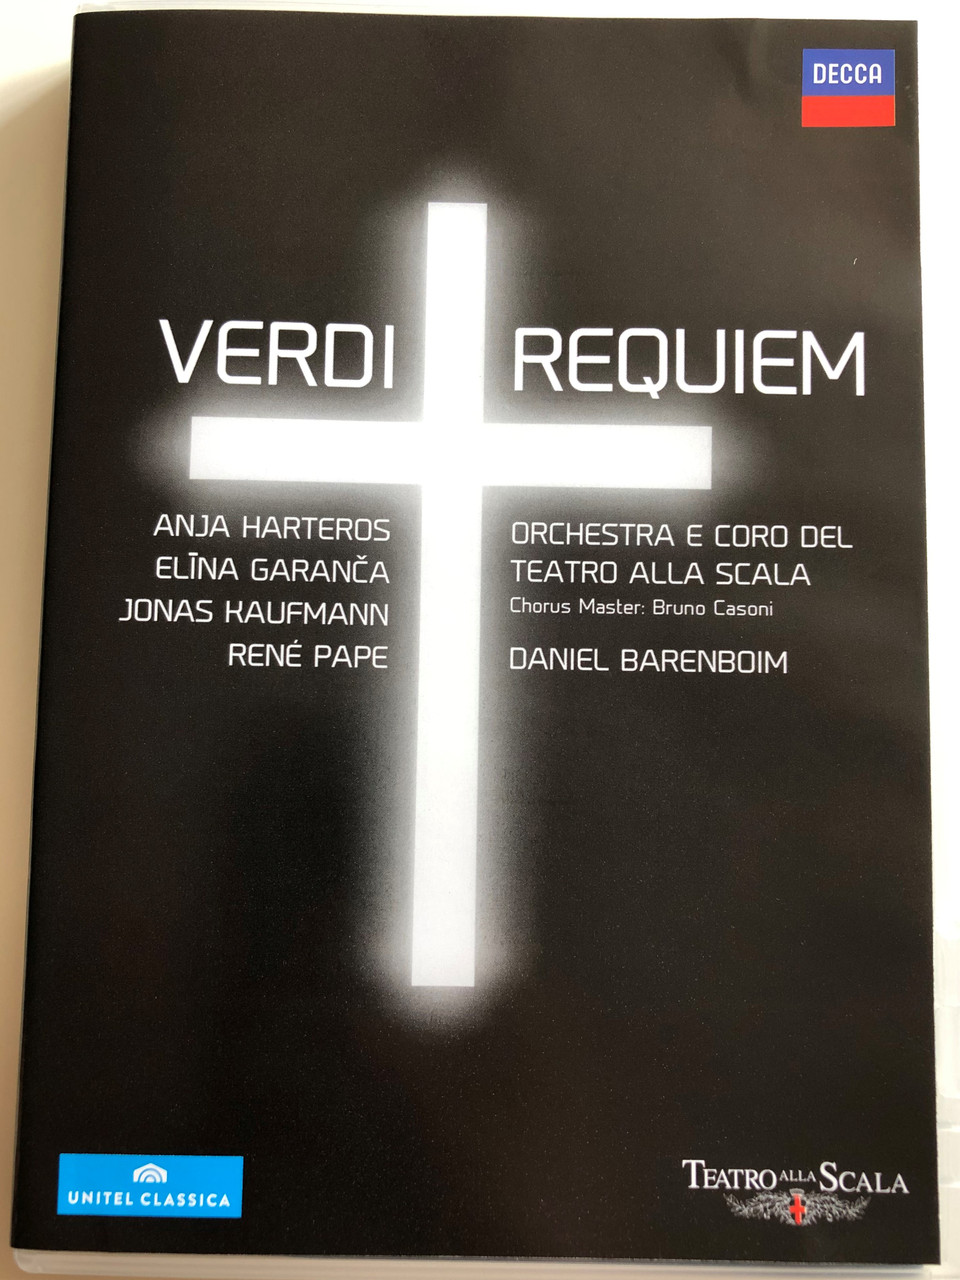 Verdi Requiem Dvd 13 Orchestra E Coro Del Teatro Alla Scala Chorus Master Bruno Casoni Daniel Barenboim Anja Harteros Elina Garanca Jonas Kaufmann Rene Pape Decca Bibleinmylanguage